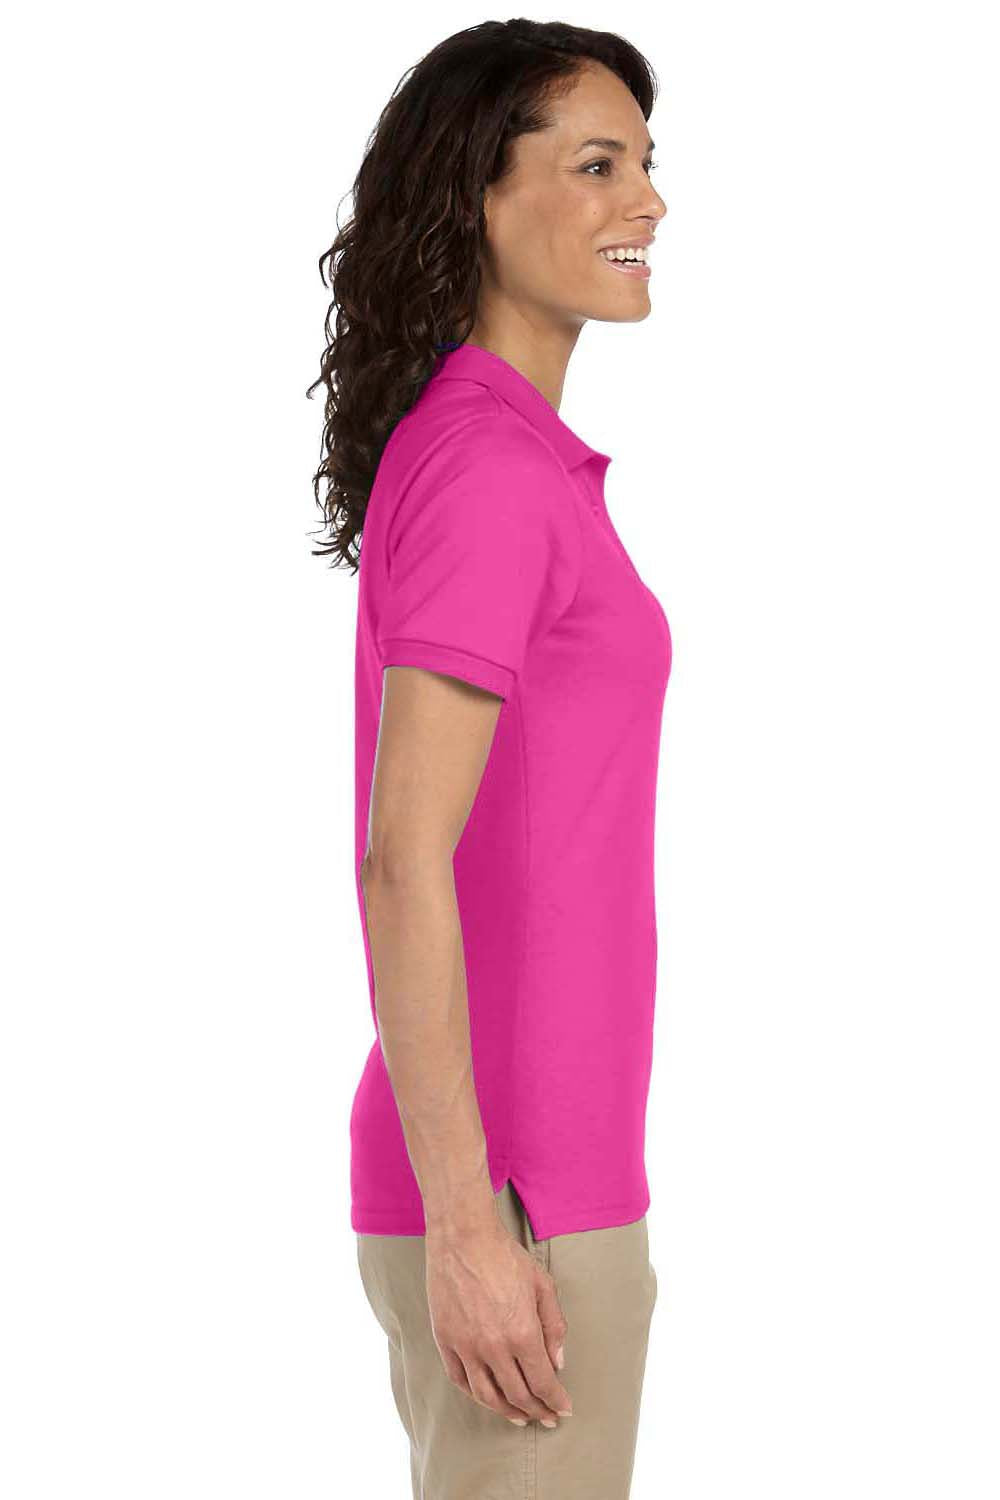 Jerzees 437W Womens SpotShield Stain Resistant Short Sleeve Polo Shirt Cyber Pink Side